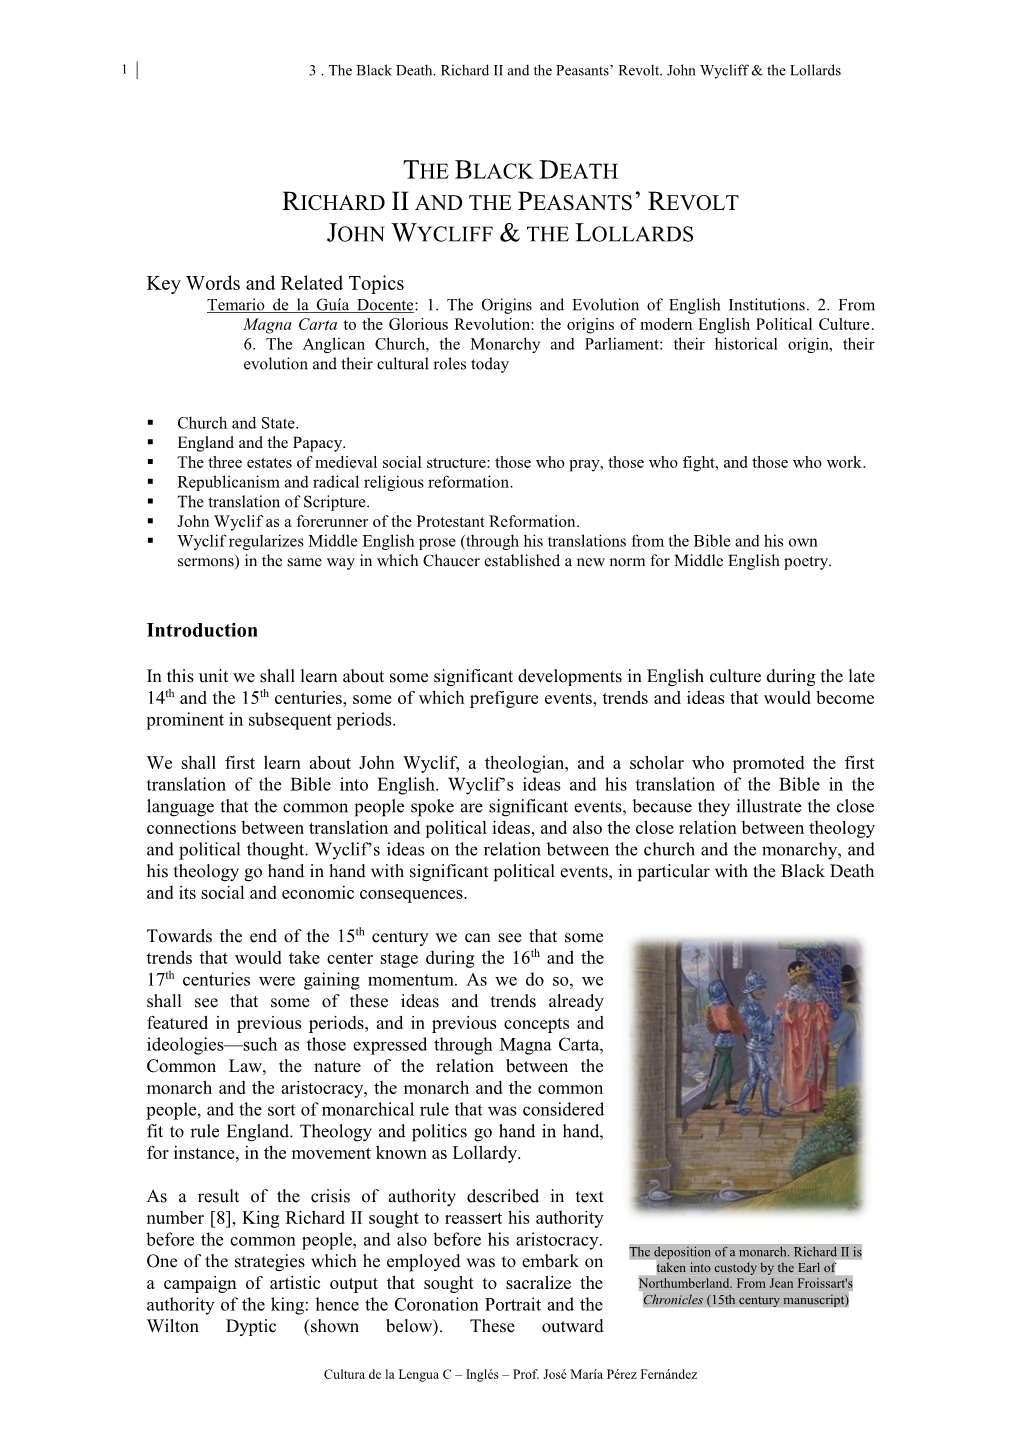 The Black Death Richard Ii and the Peasants' Revolt John Wycliff & the Lollards